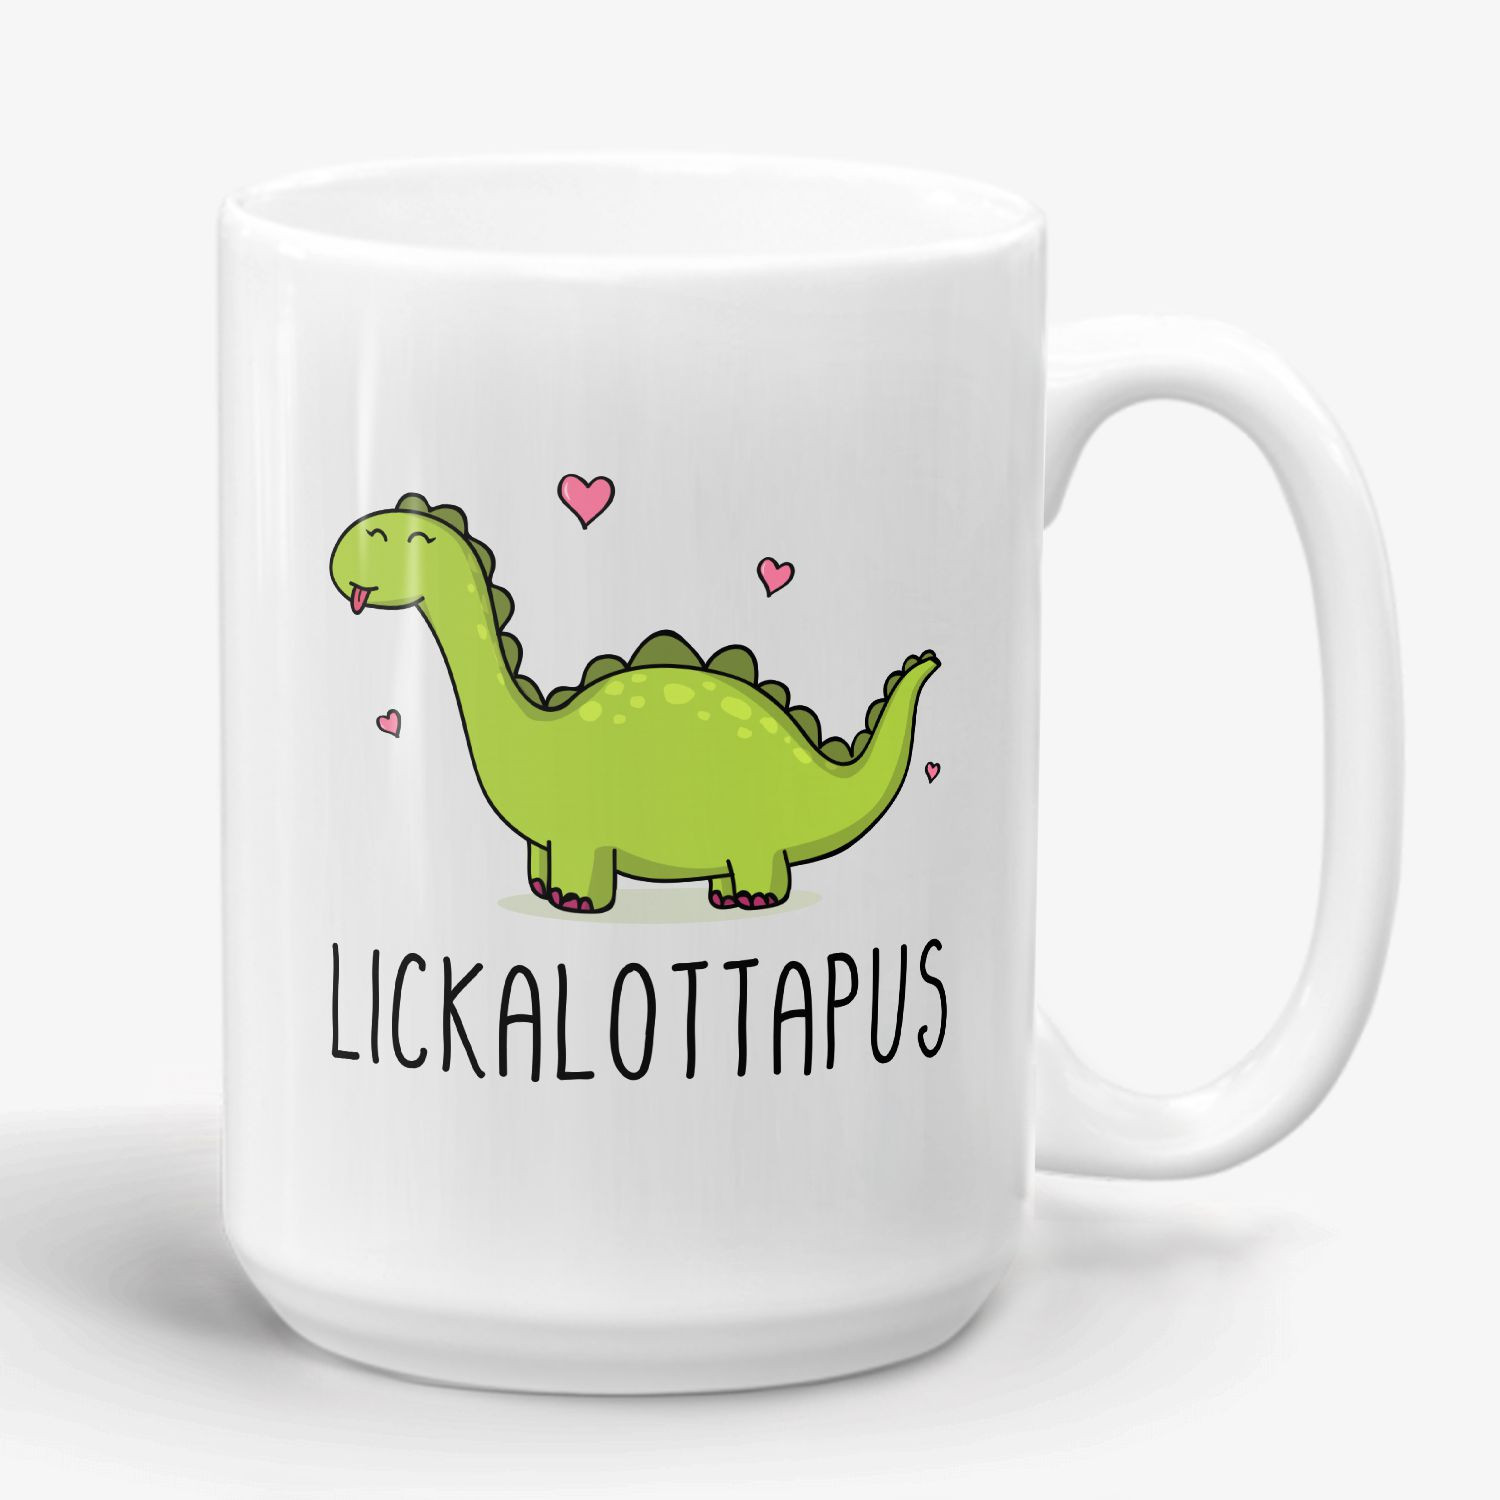 Lesbian Valentines Day Gifts
 Lickalottapus Funny Lesbian Mug LGBT Gift for